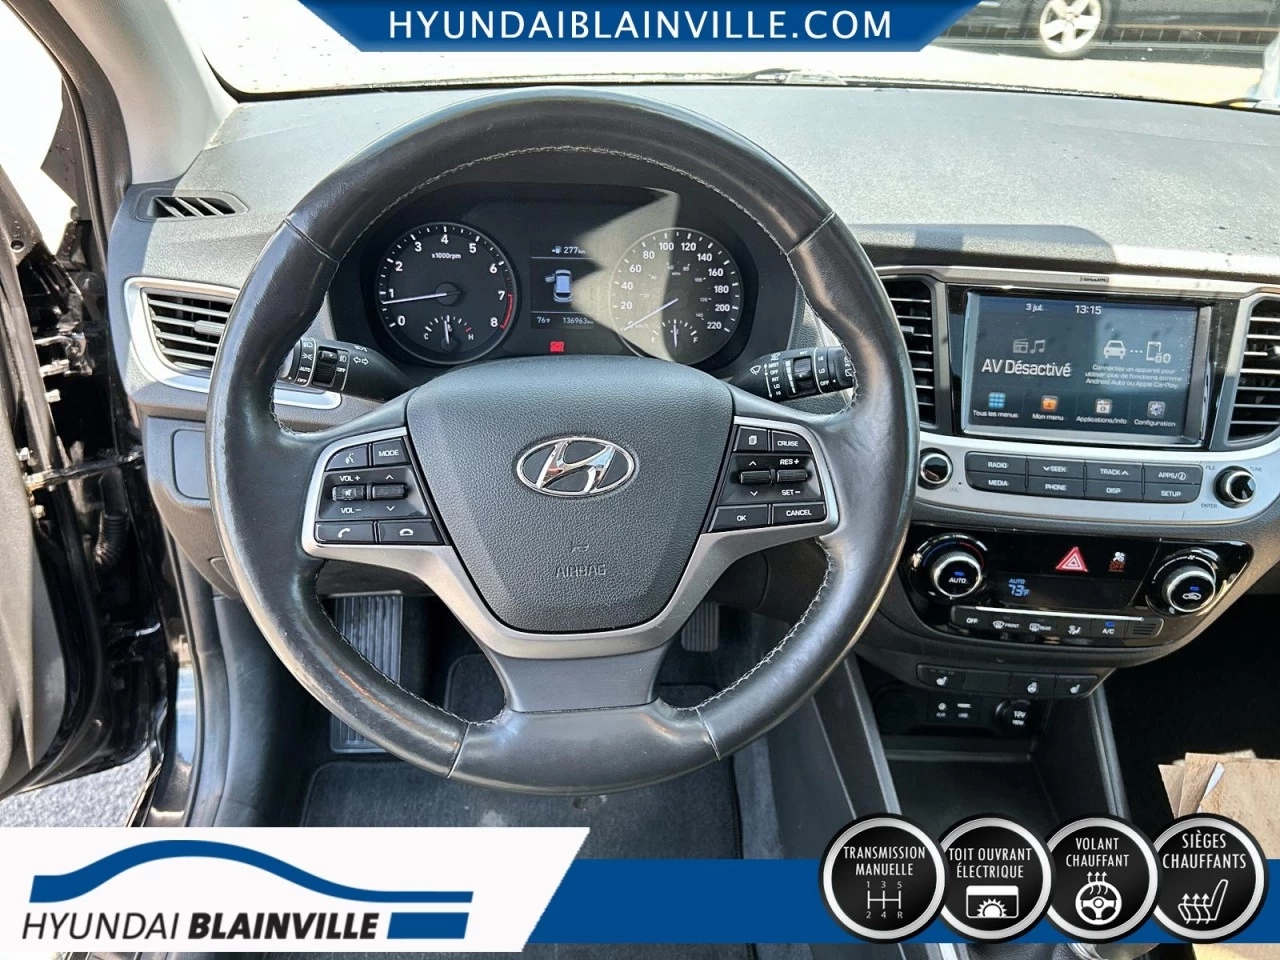 2019 Hyundai Accent ULTIMATE, MANUELLE, TOIT OUVRANT+ Main Image